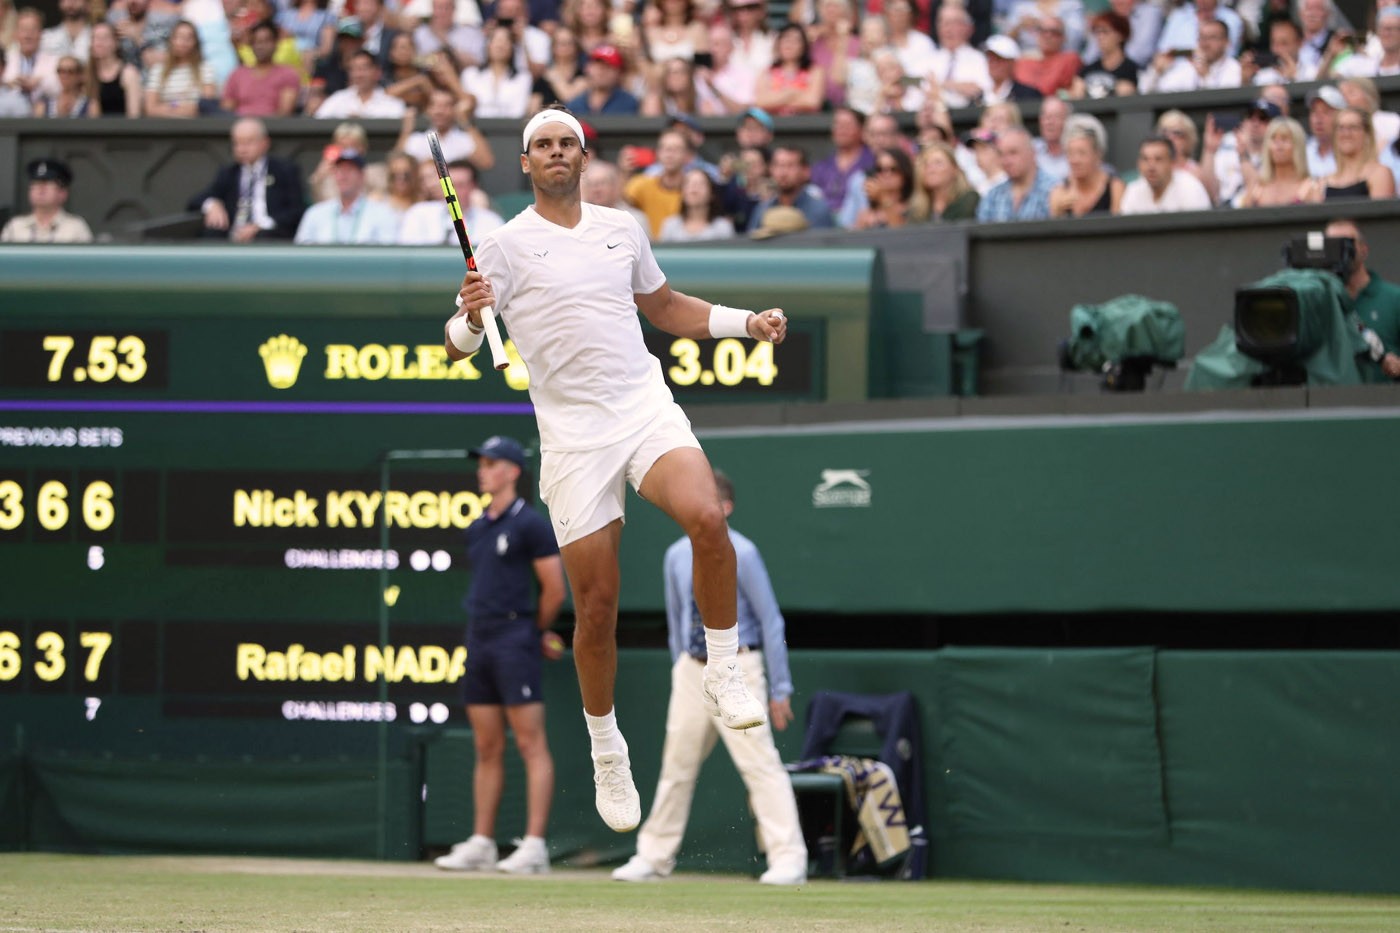 Rafael Nadal supera el gran escollo de Kyrgios en Wimbledon